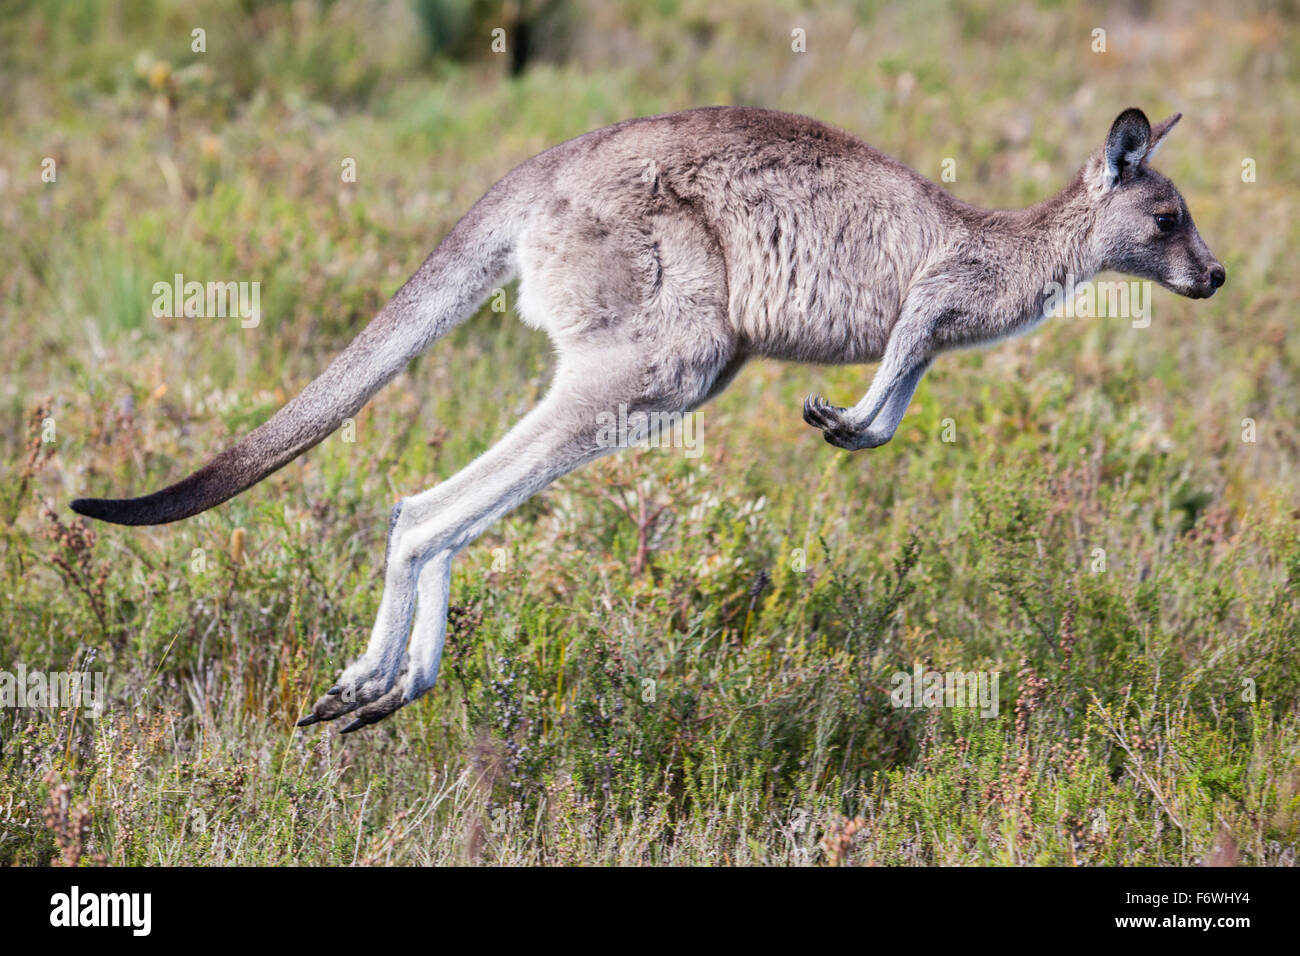 Eastern grey kangaroo, Wilsons Promontory, Victoria, Australia Stock Photo